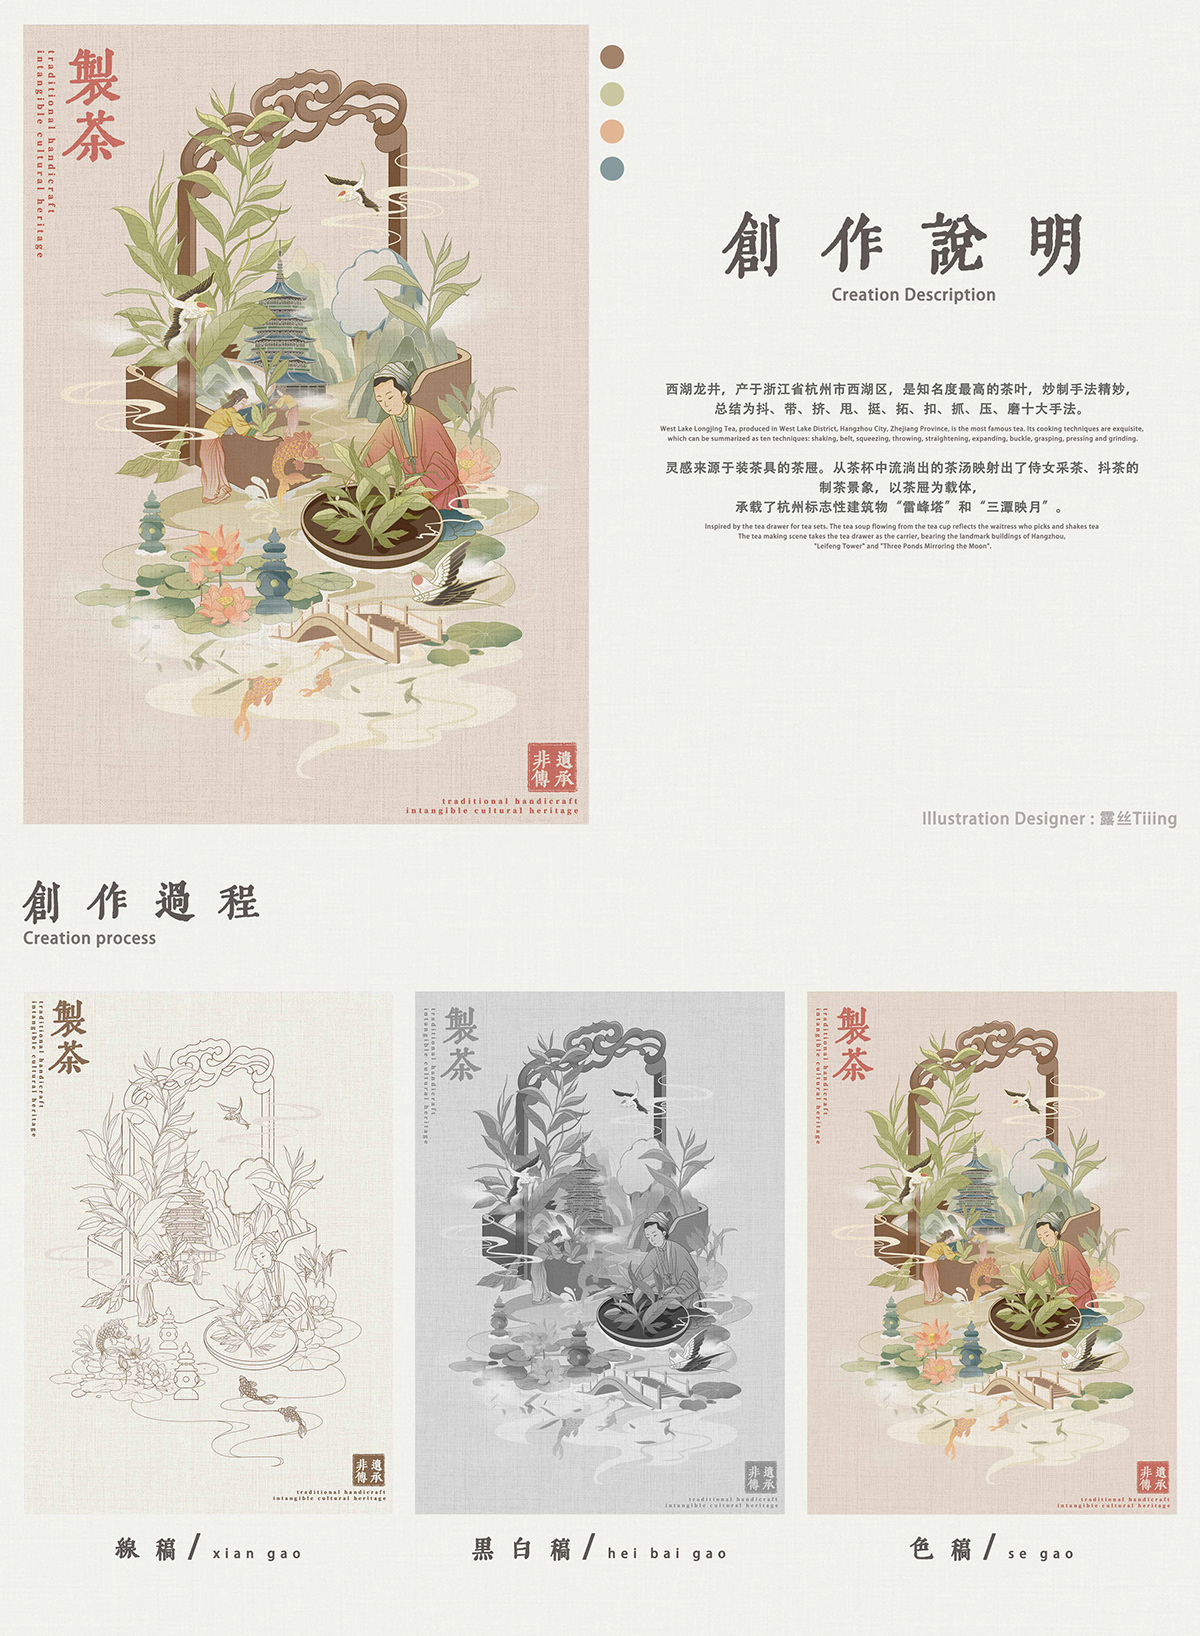 china culture intangible heritage artwork design Digital Art  ILLUSTRATION  traditional